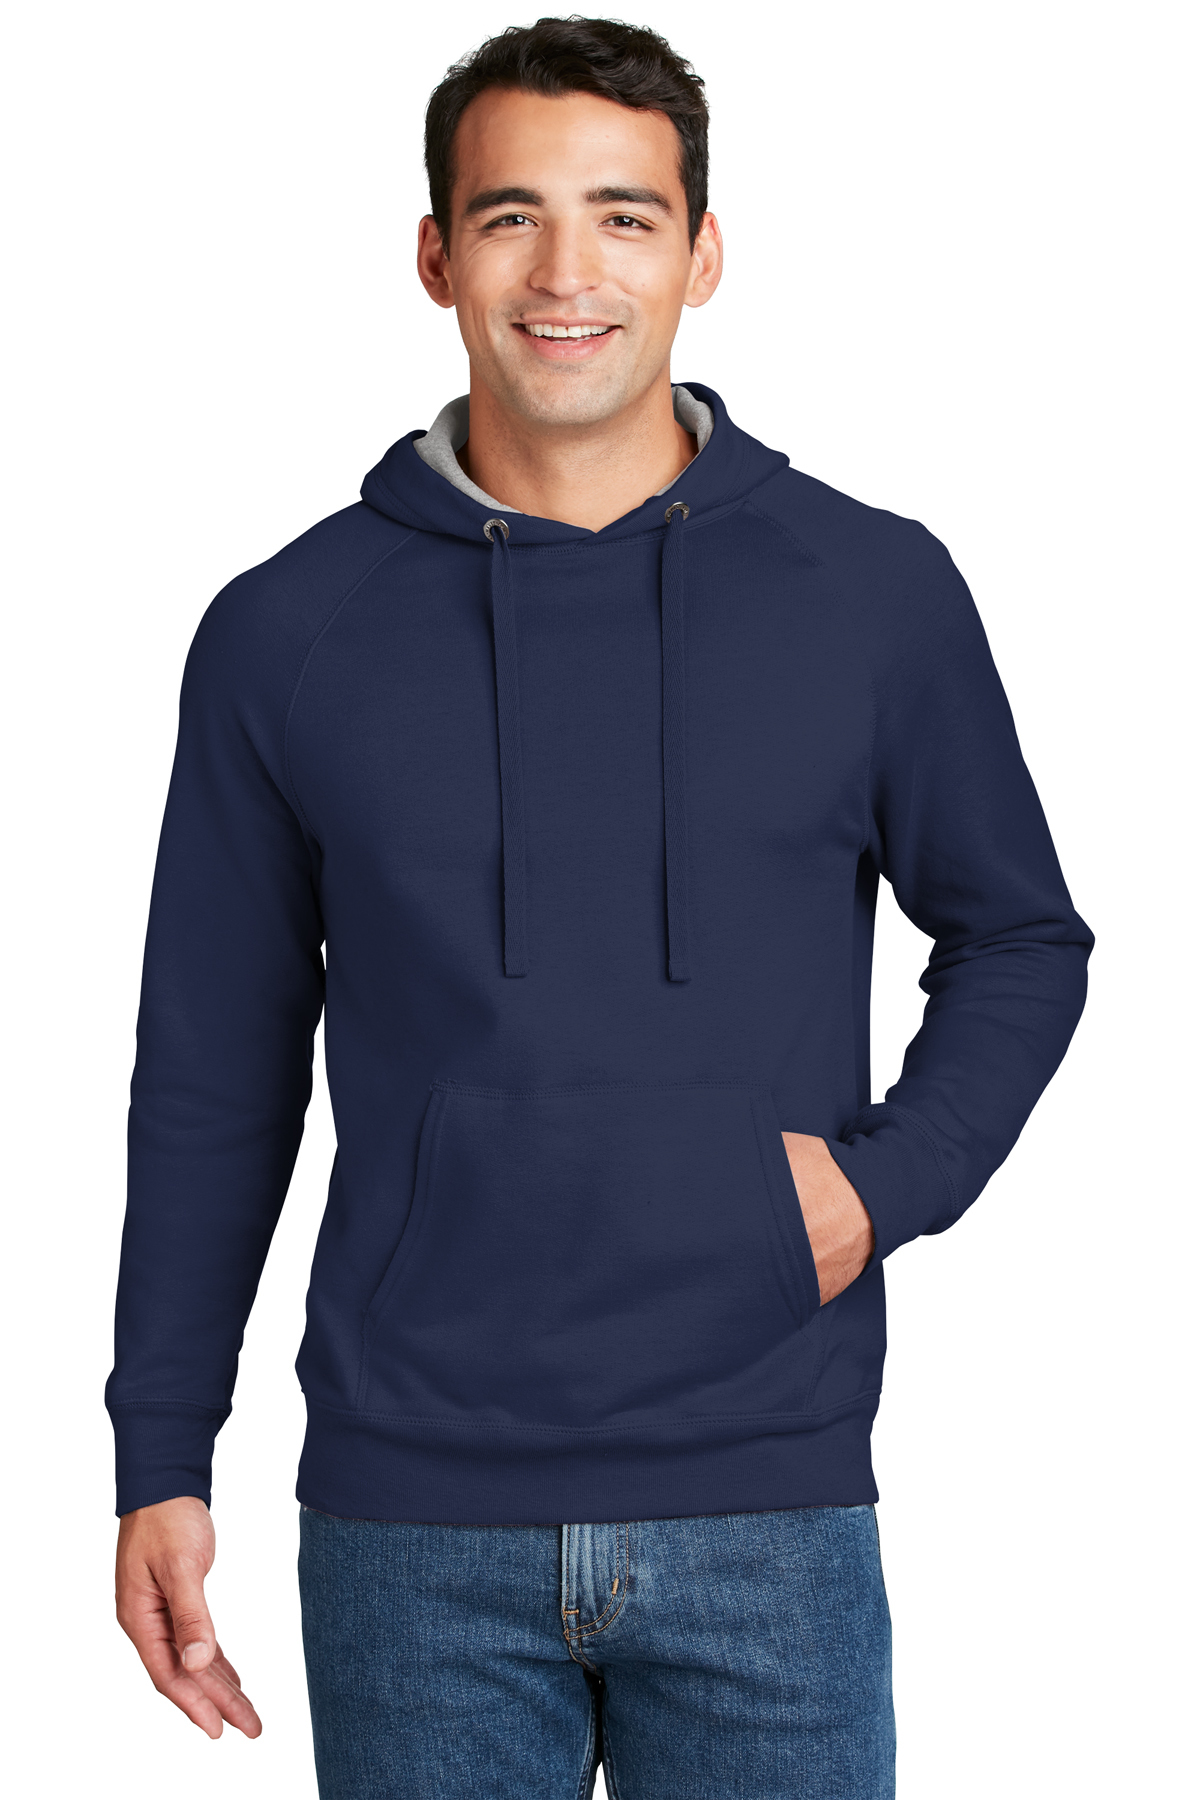 Hanes Nano Pullover Hooded Sweatshirt | Product | SanMar